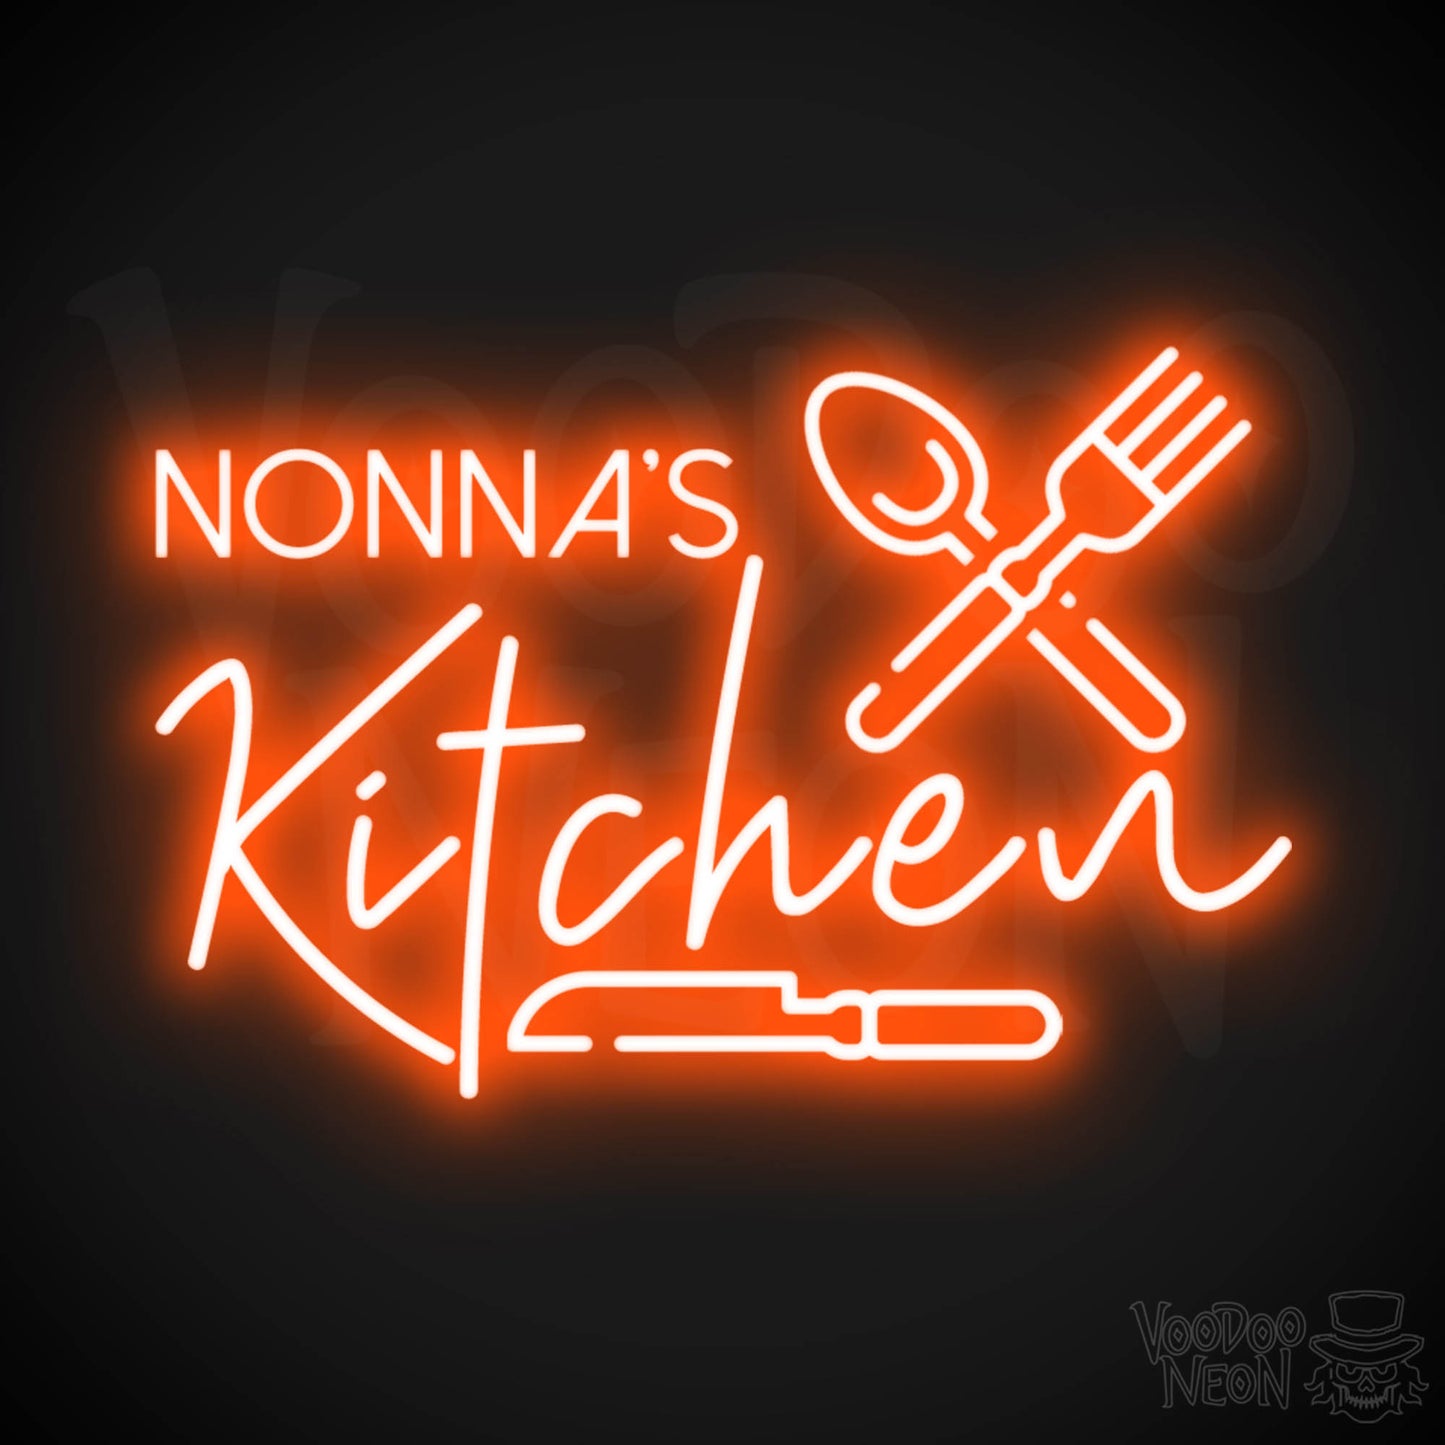 Nonna's Kitchen Neon Sign - Neon Nona's Kitchen Sign - Wall Art - Color Orange